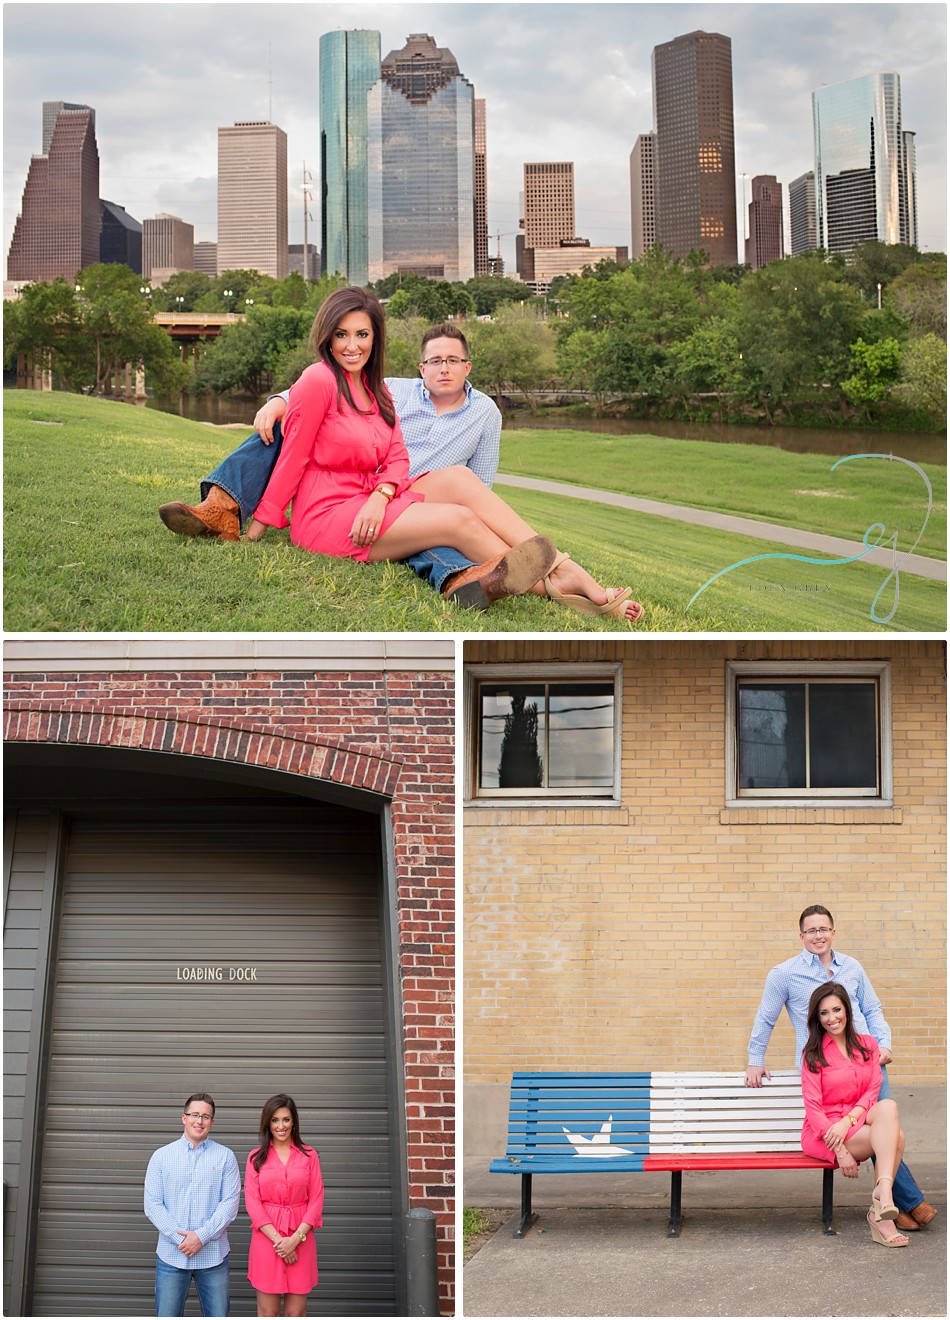 Houston skyline and Houston couples